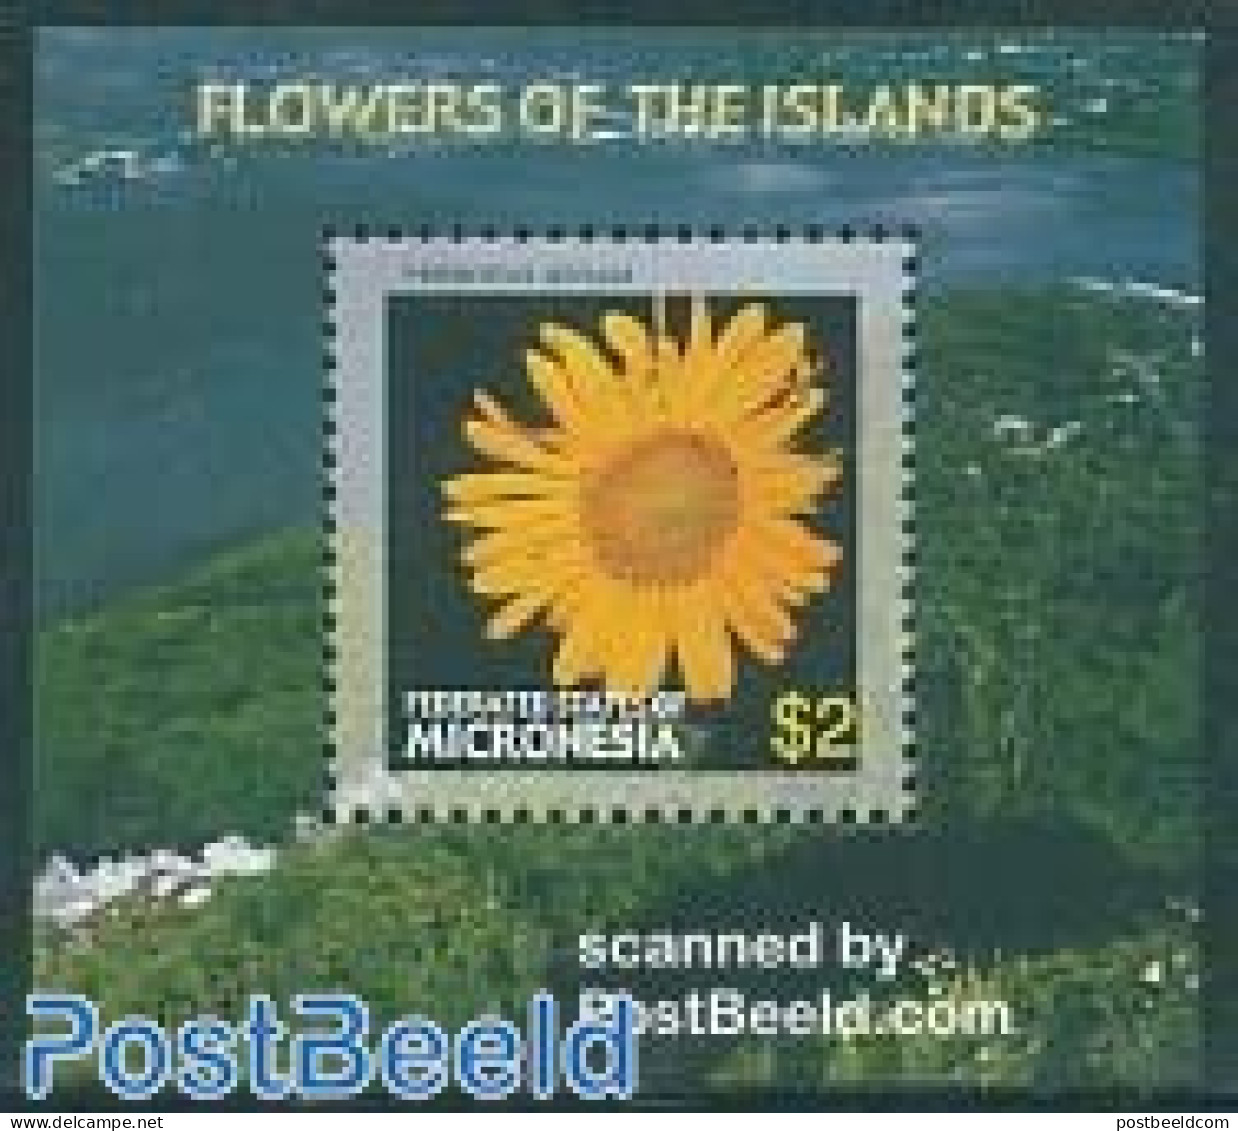 Micronesia 2006 Flowers S/s, Mint NH, Nature - Flowers & Plants - Micronesië